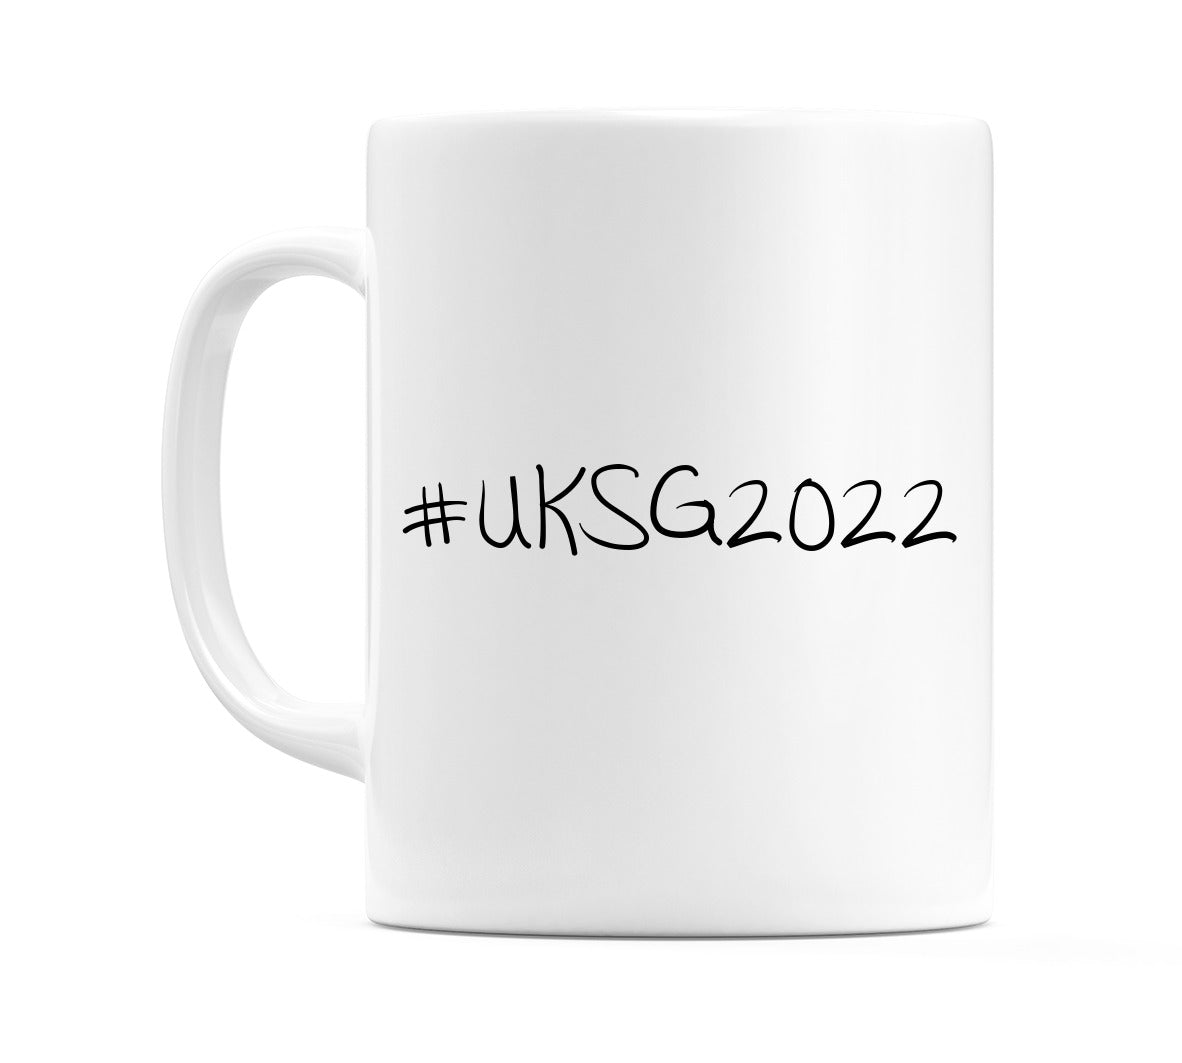 #UKSG2022 Mug